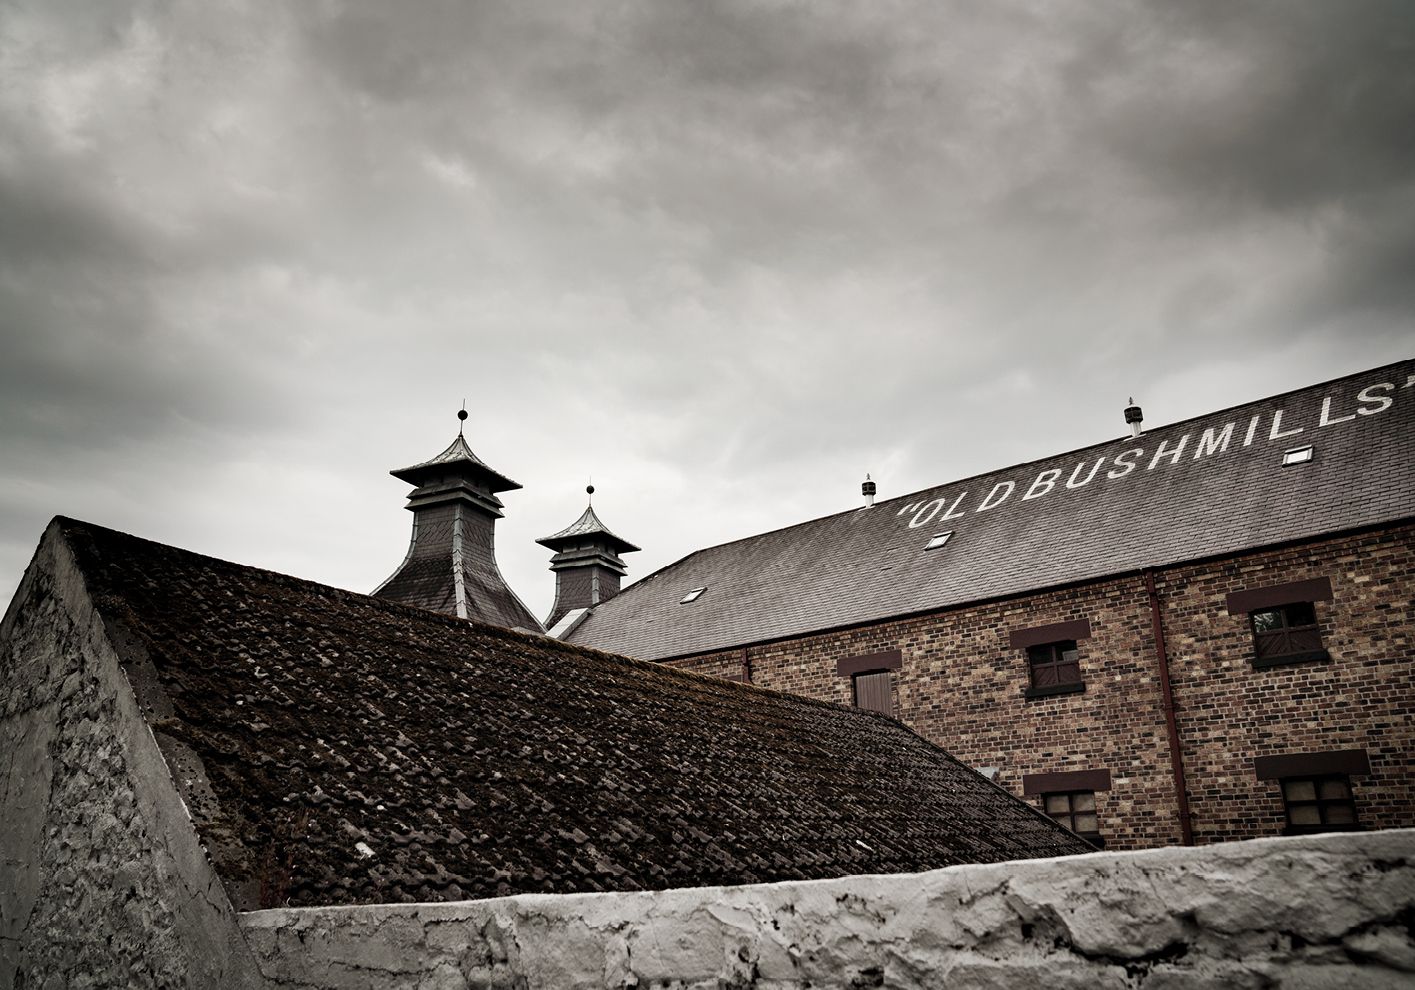 The Old Bushmills Distillery